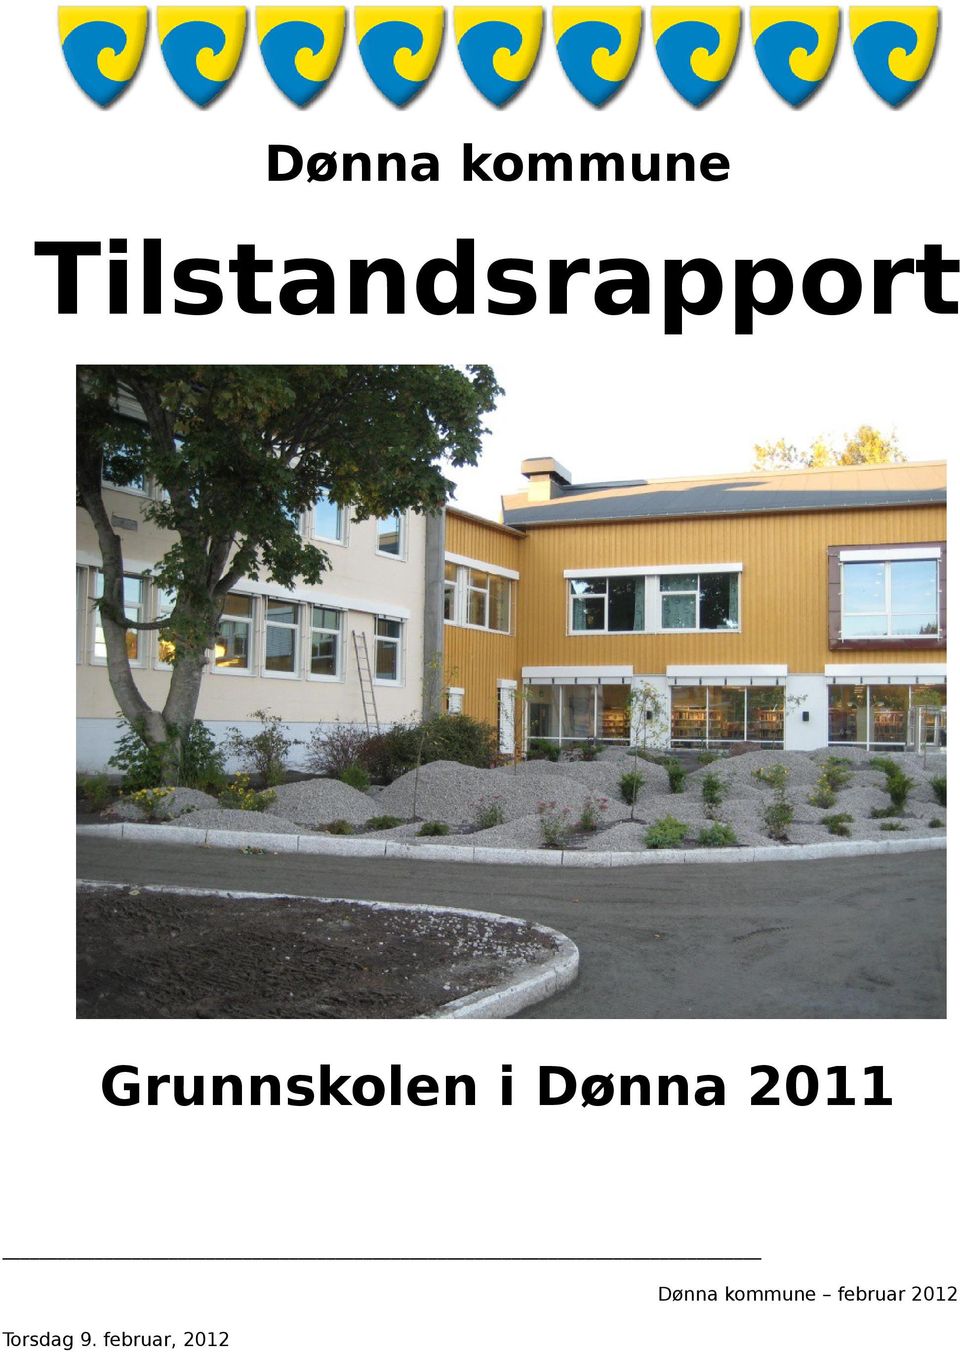 Grunnskolen i Dønna 2011